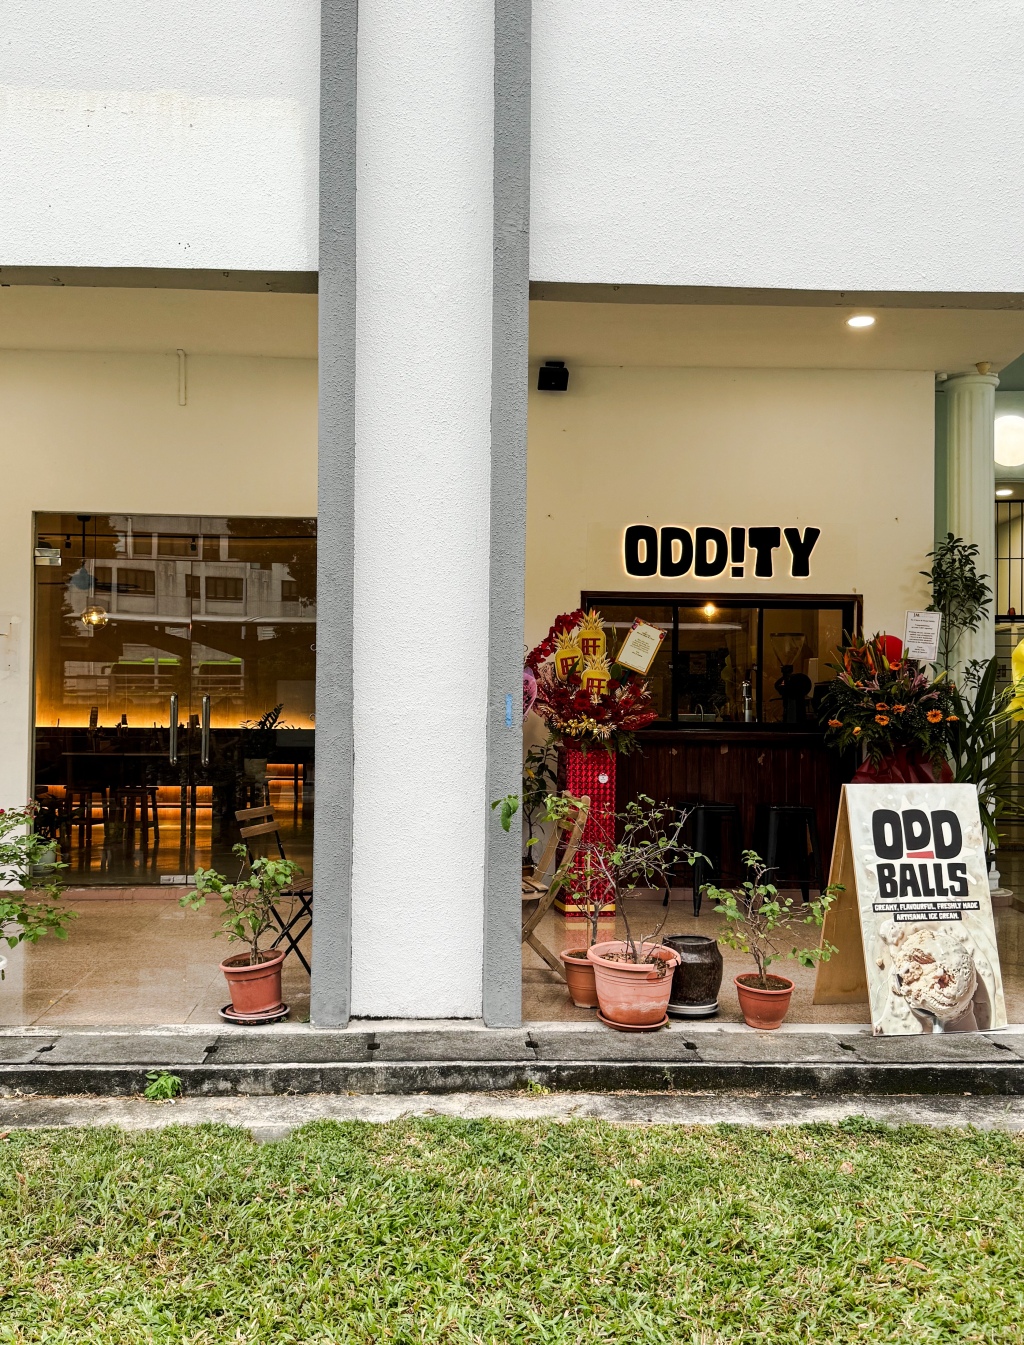 Oddity / Oddballs Ice Cream — Yeley Building